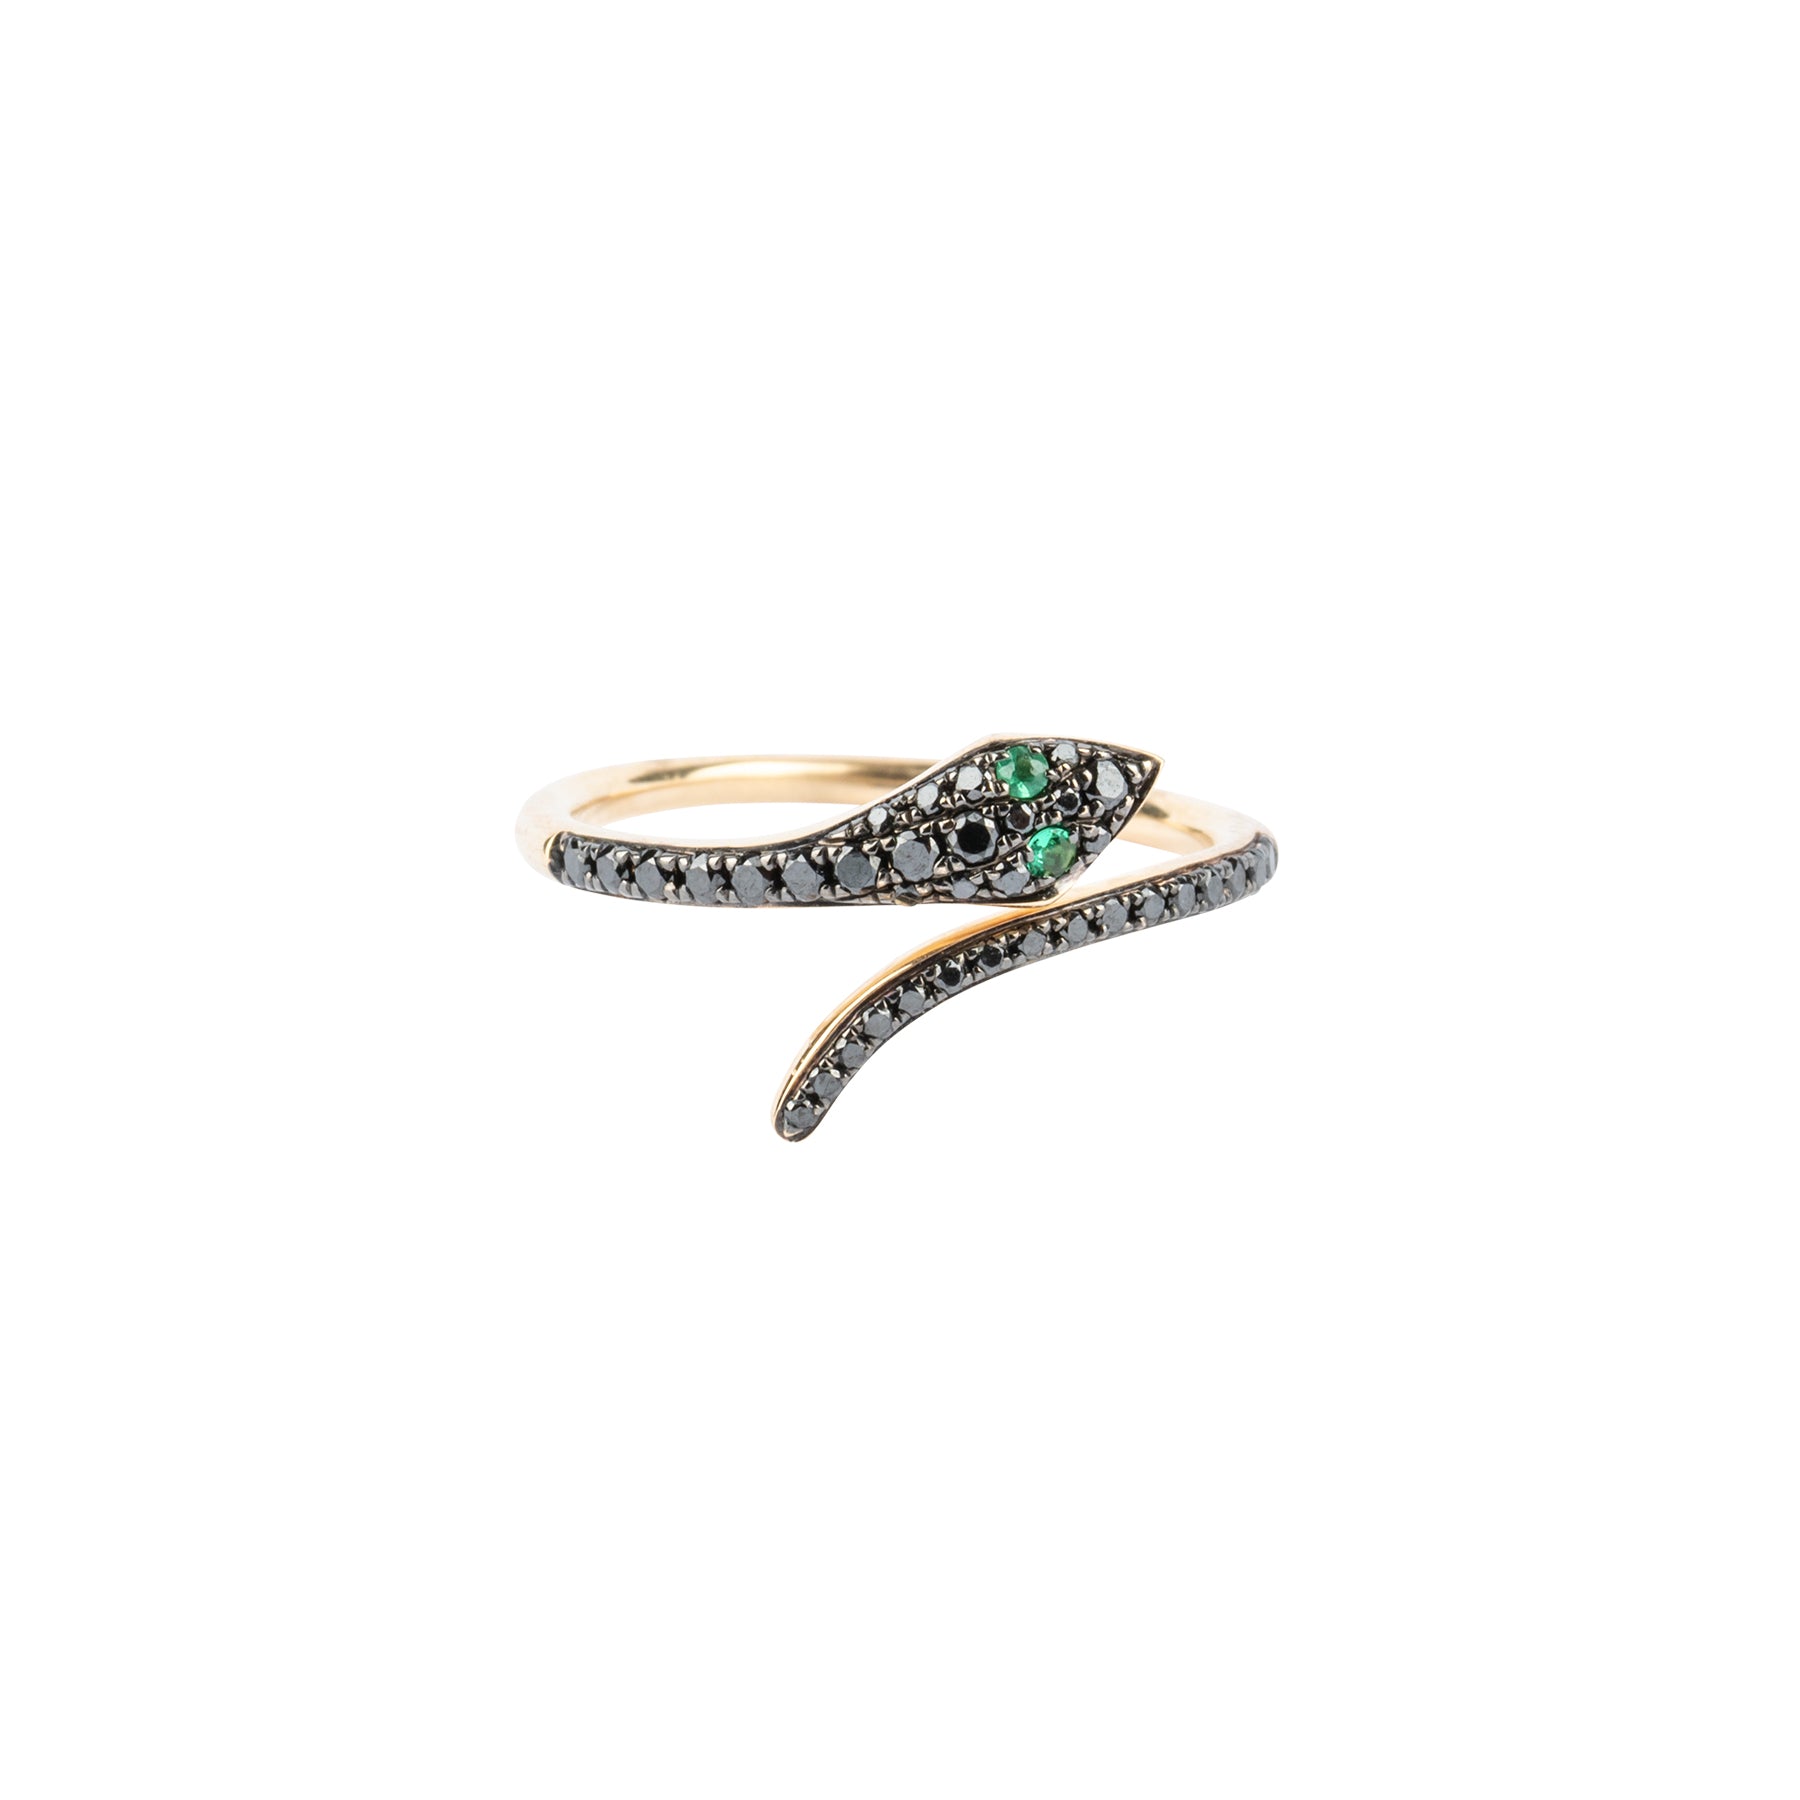 Black Diamond Baby Snake Ring With Emerald Eyes - Nina Segal Jewelry